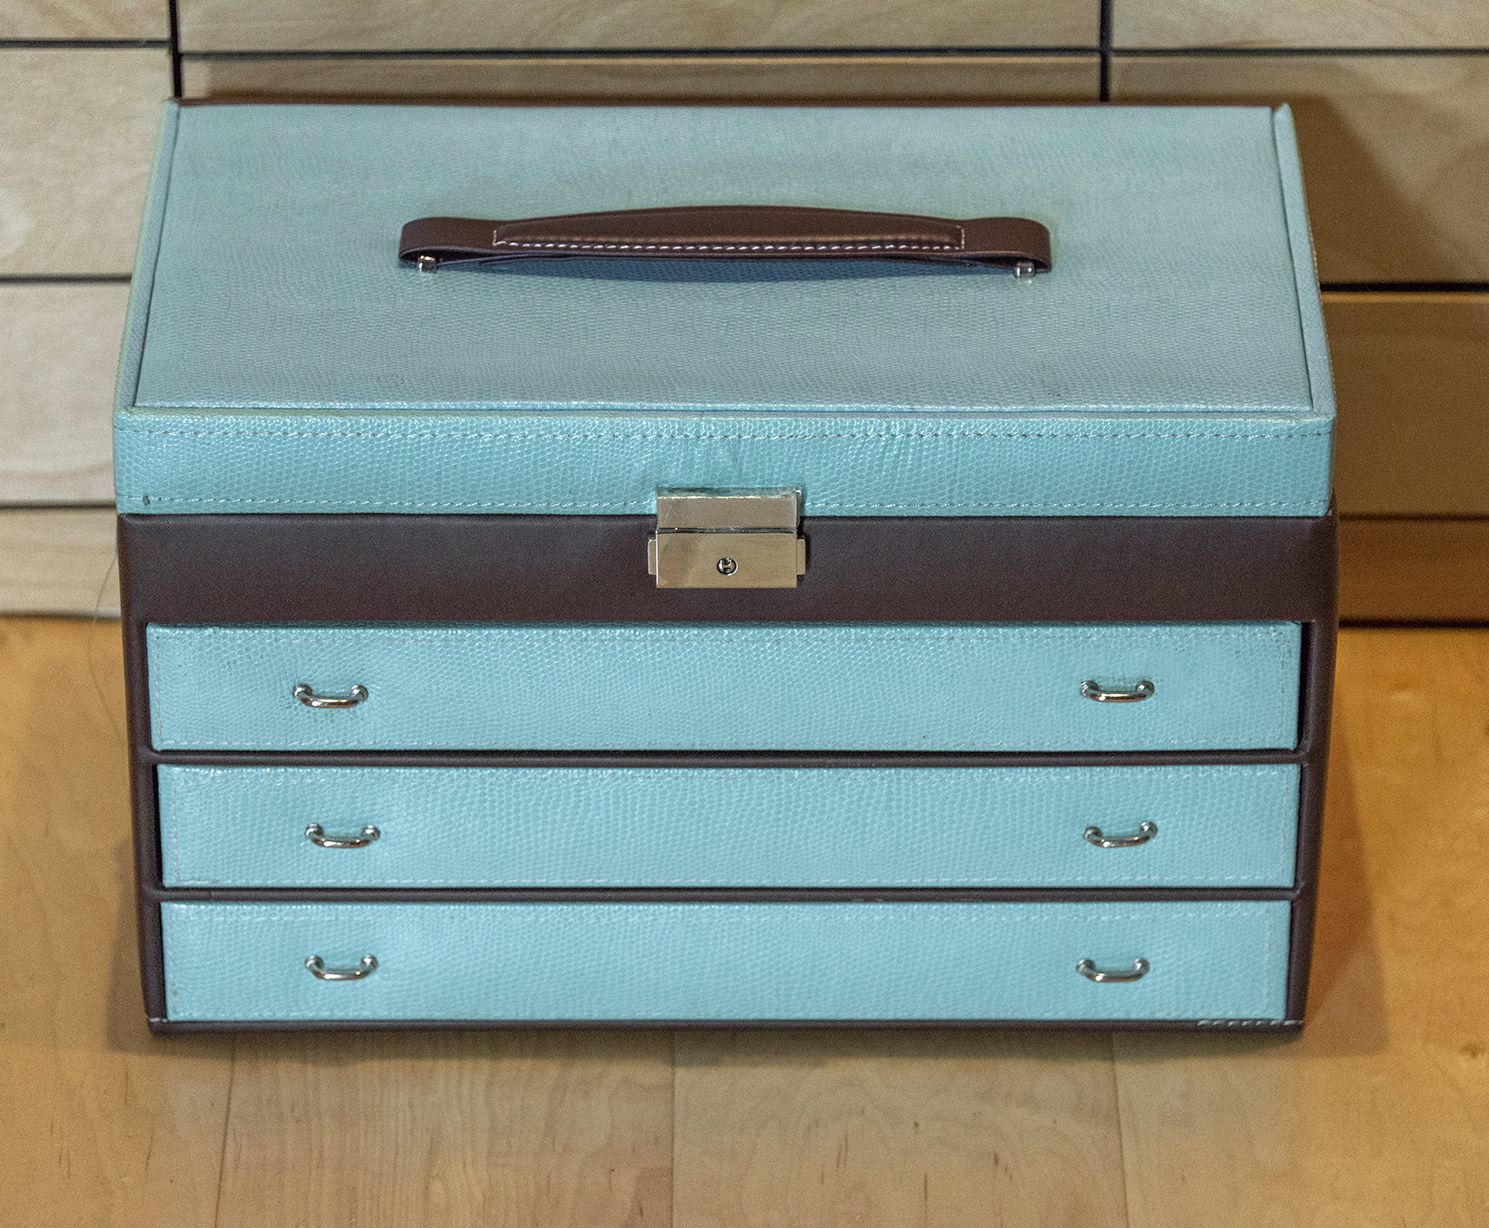 Jewlery Box. Tiffany blue, BIG, looks darker in picture then in real life. Jewlery storage bin.